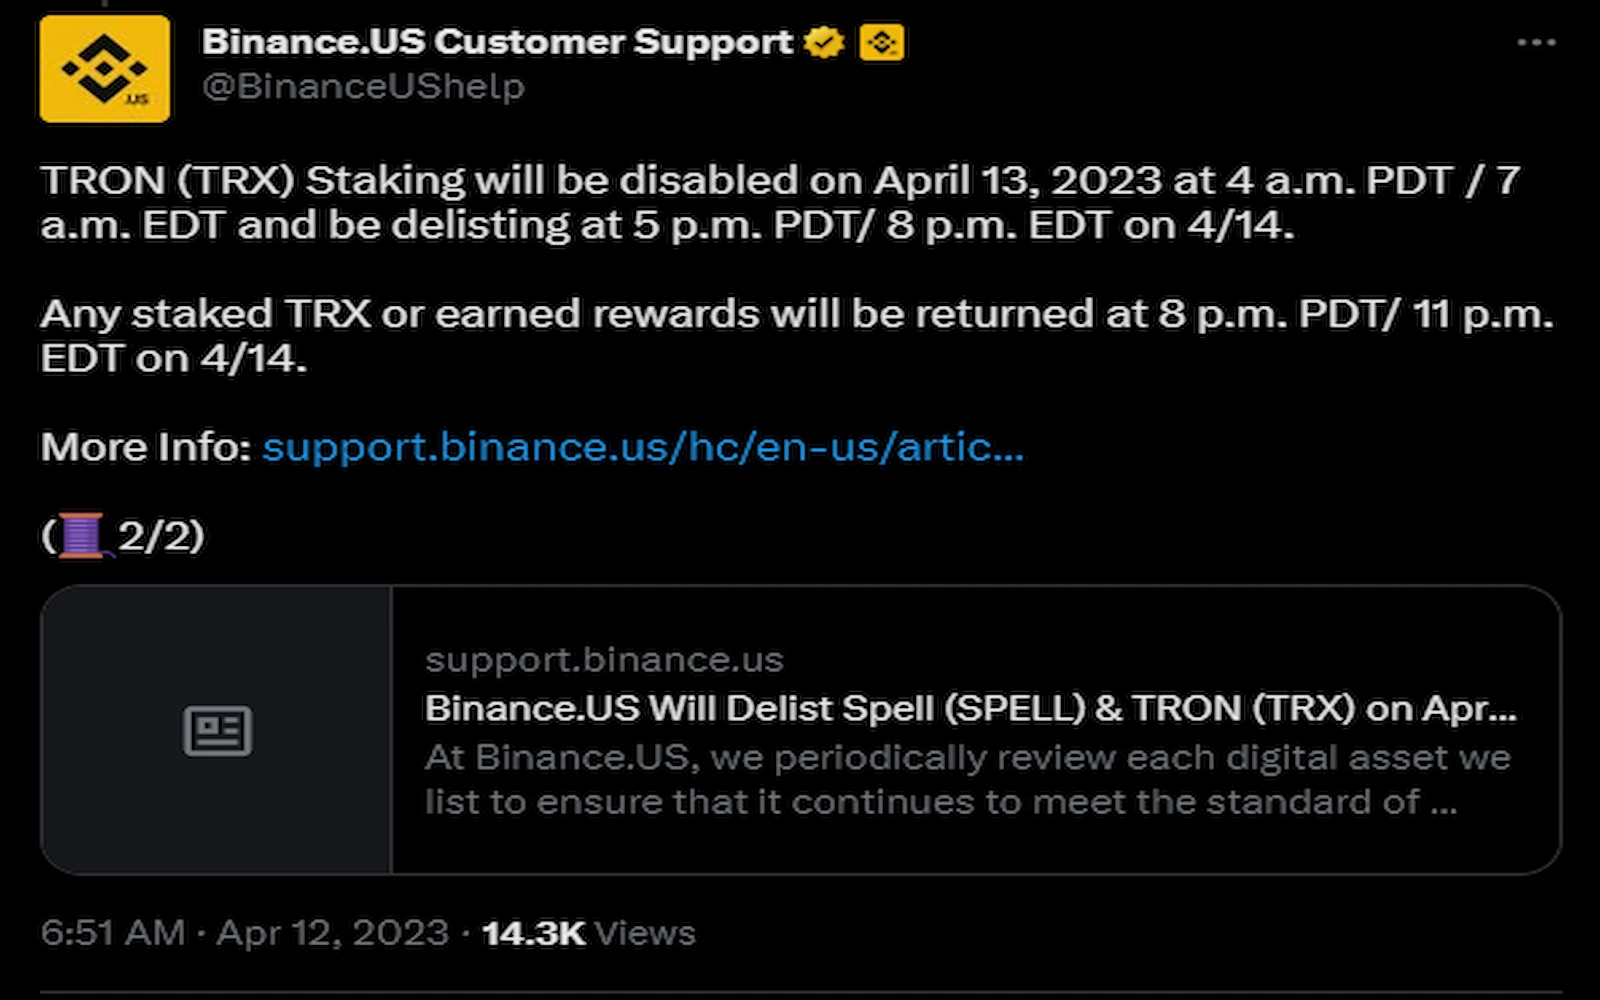 Tron's TRX cryptocurrency